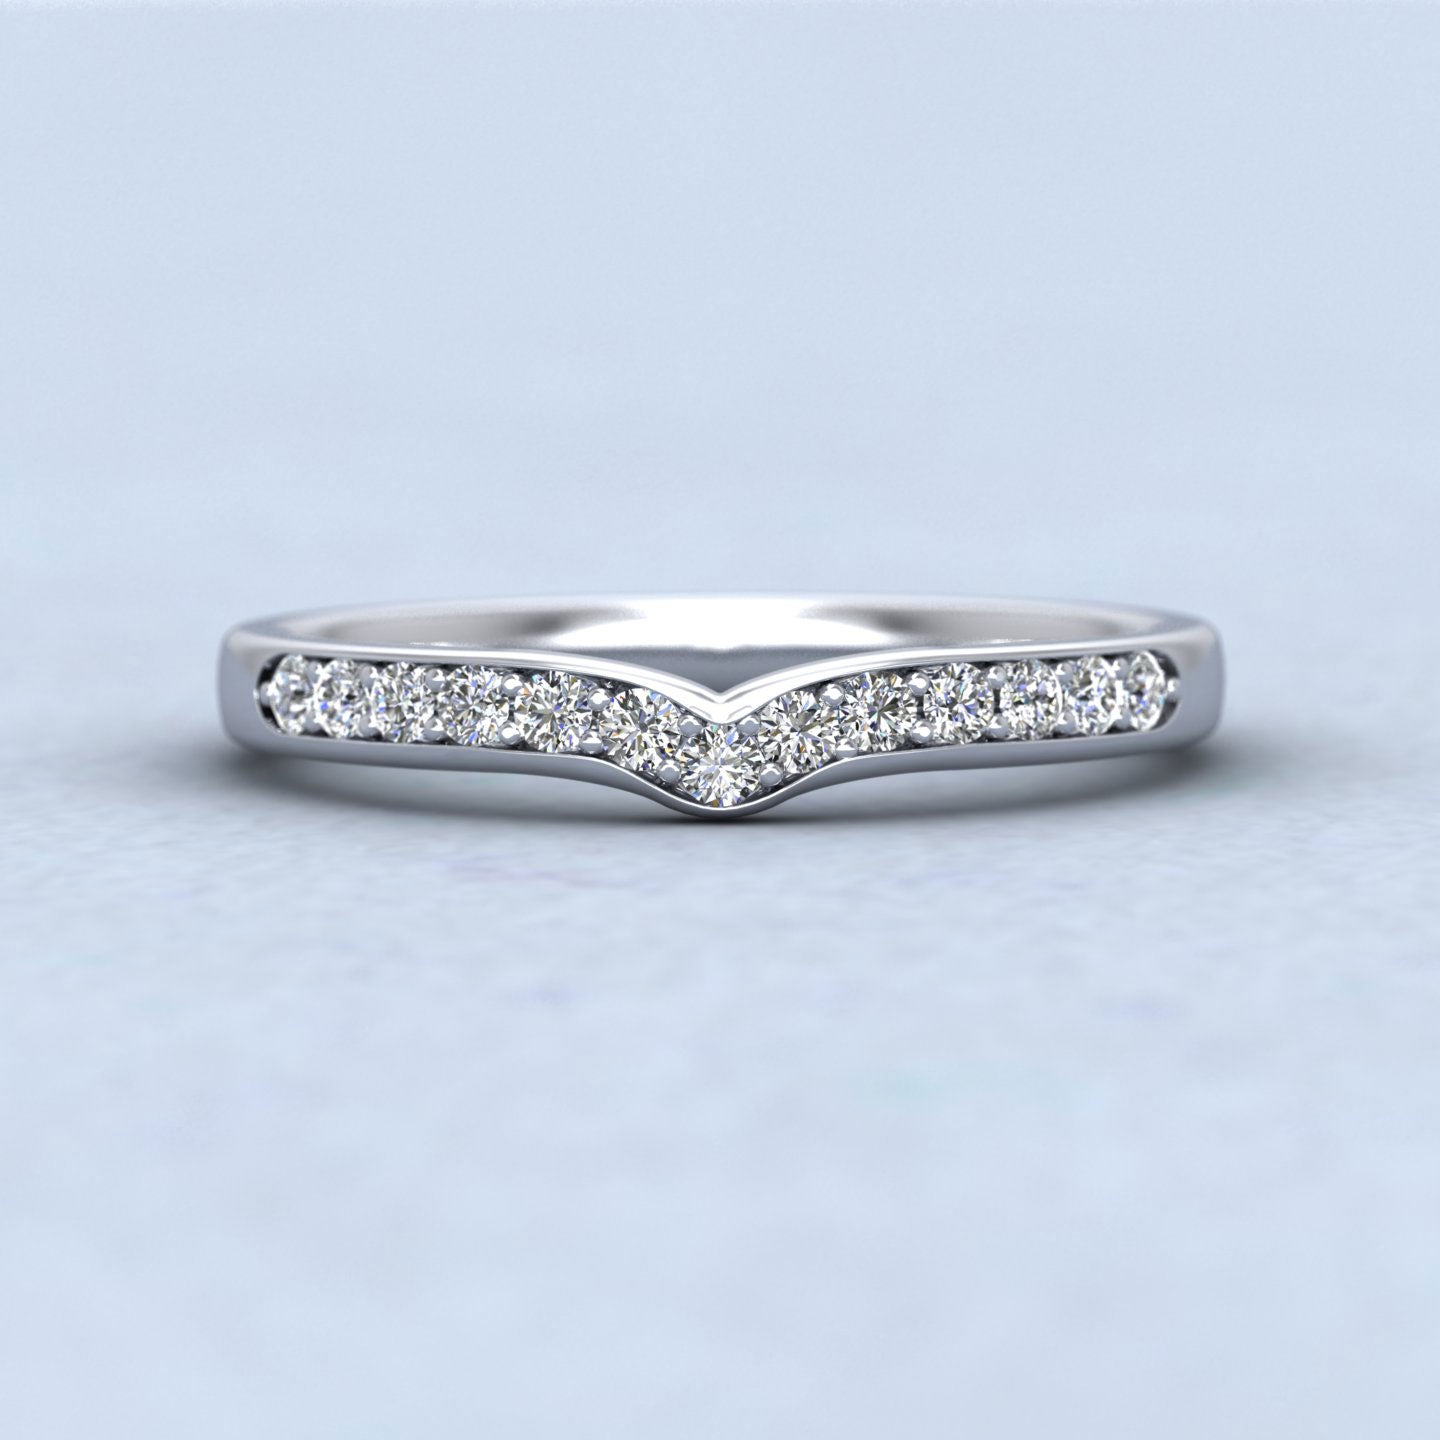 Slight Wishbone Shaped Bead Set Diamond Wedding Ring In 950 Platinum 2.25mm Wide